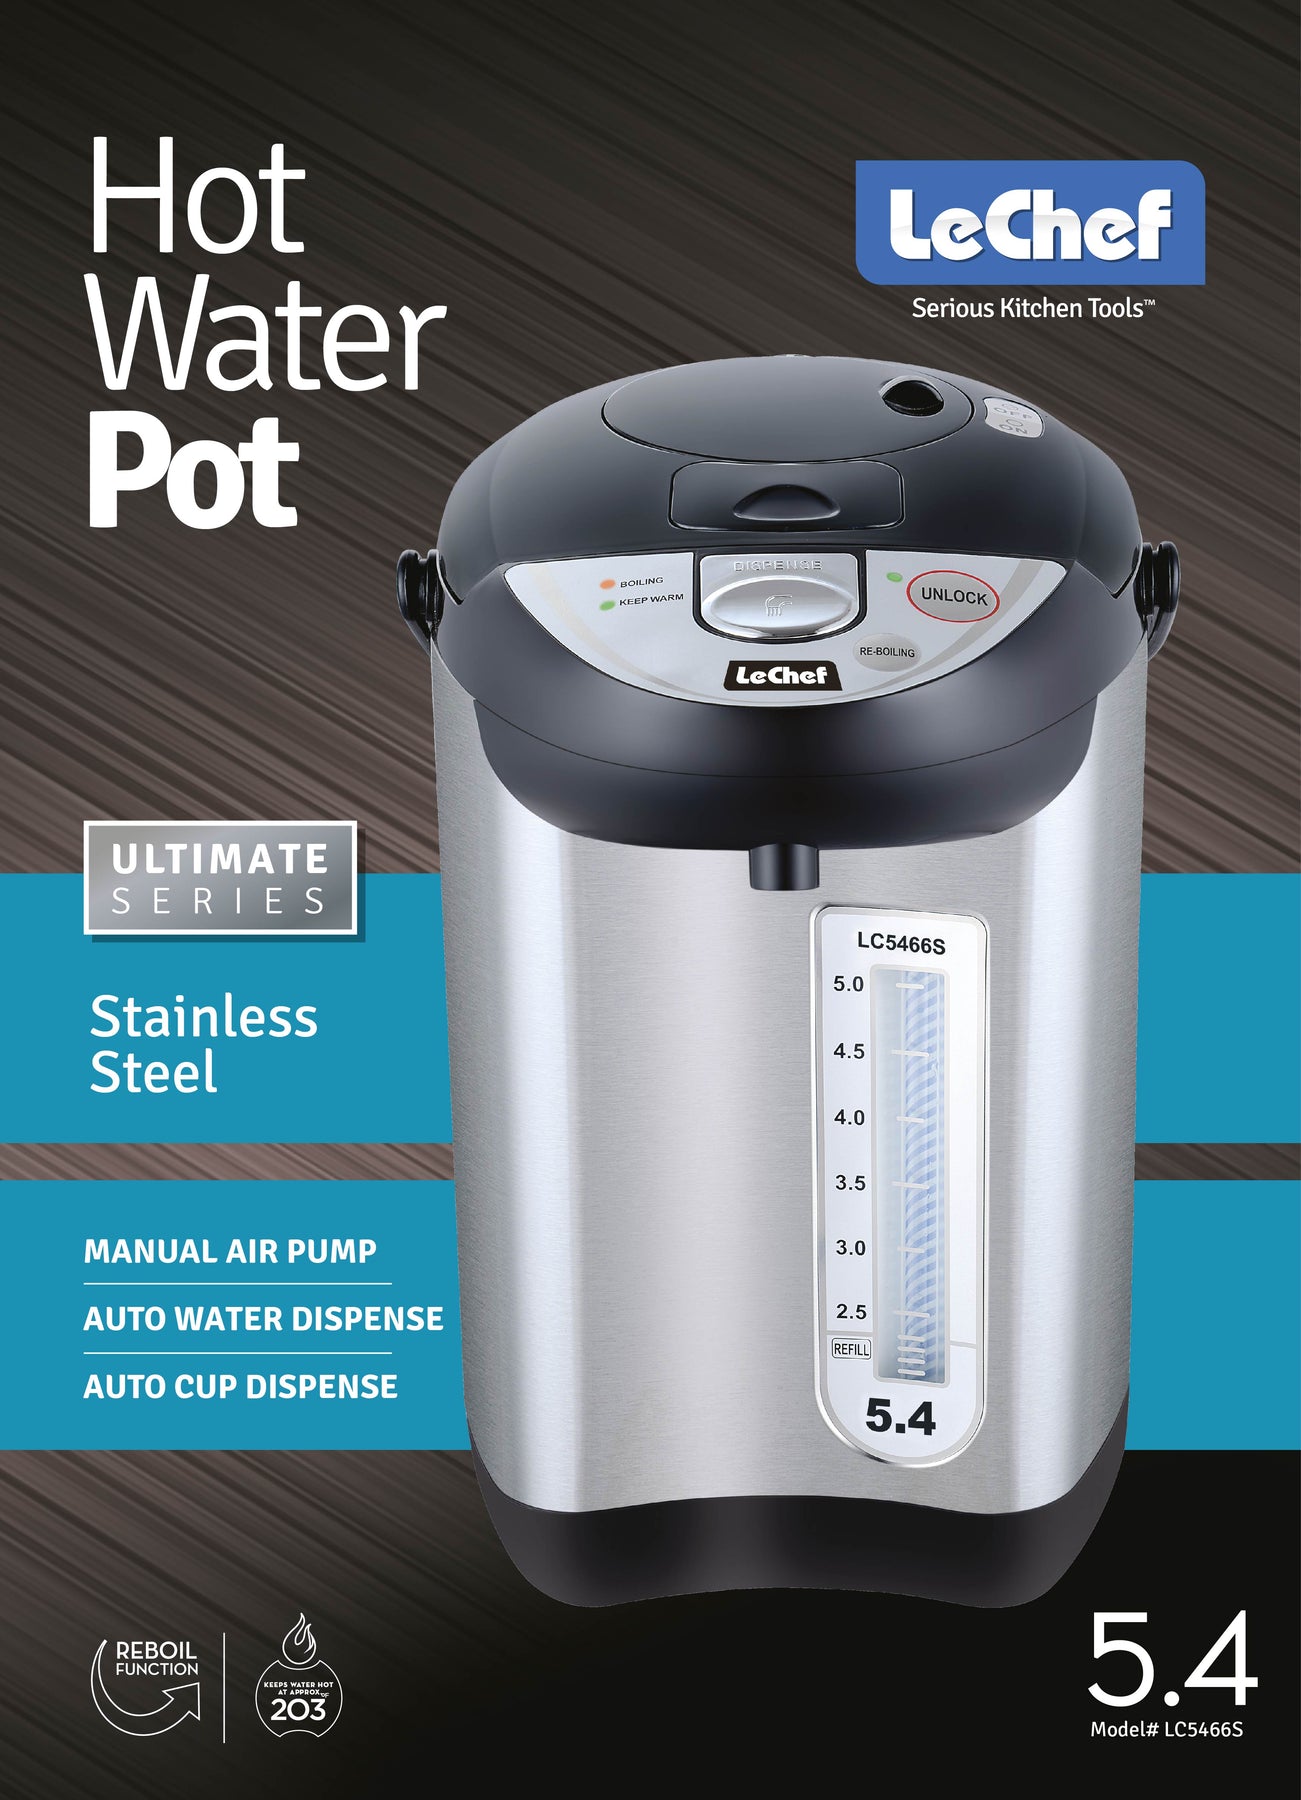 hot water pot - appliances - by owner - sale - craigslist